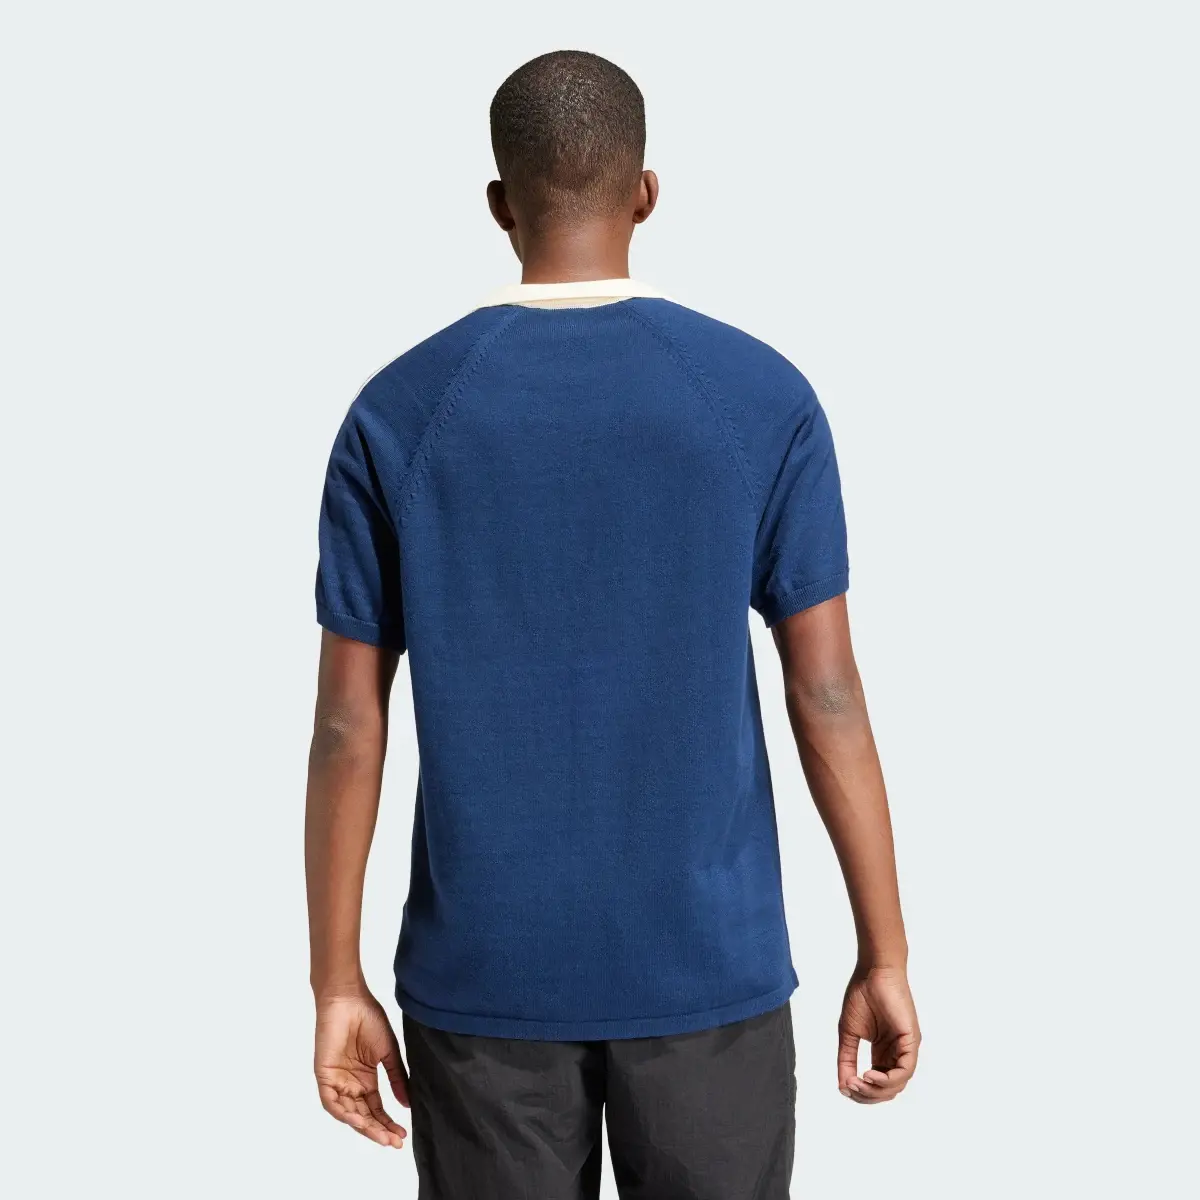 Adidas T-shirt Premium Knitted. 3